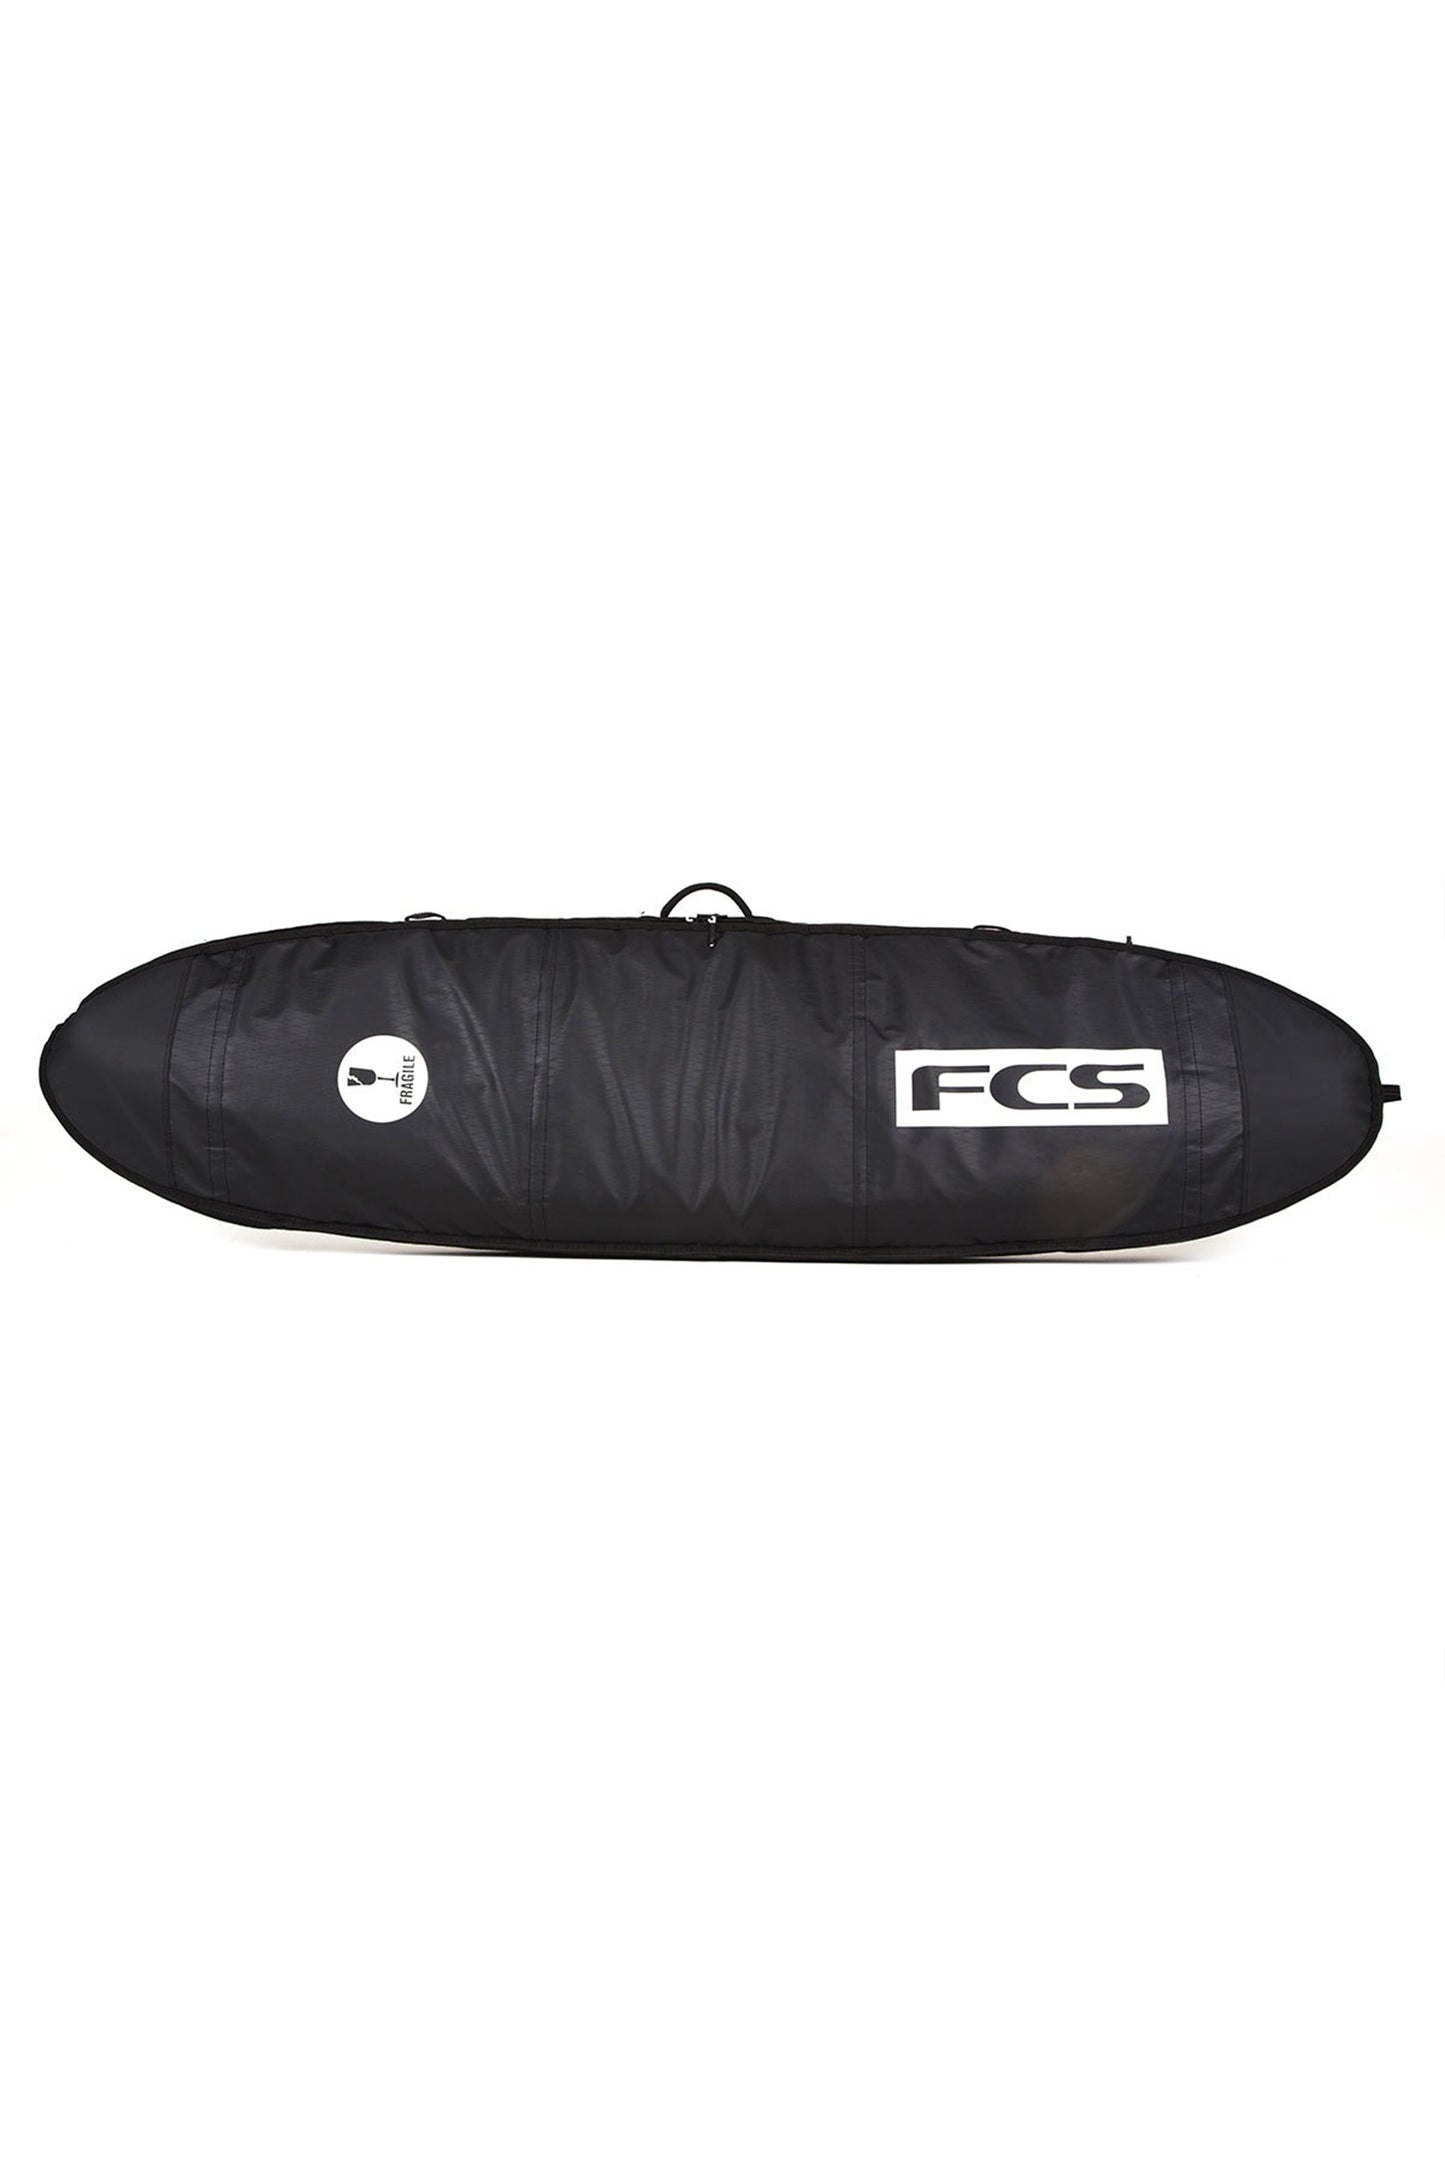 Pukas-Surf-Shop-FCS-boardbags-travel-1-longboard-black